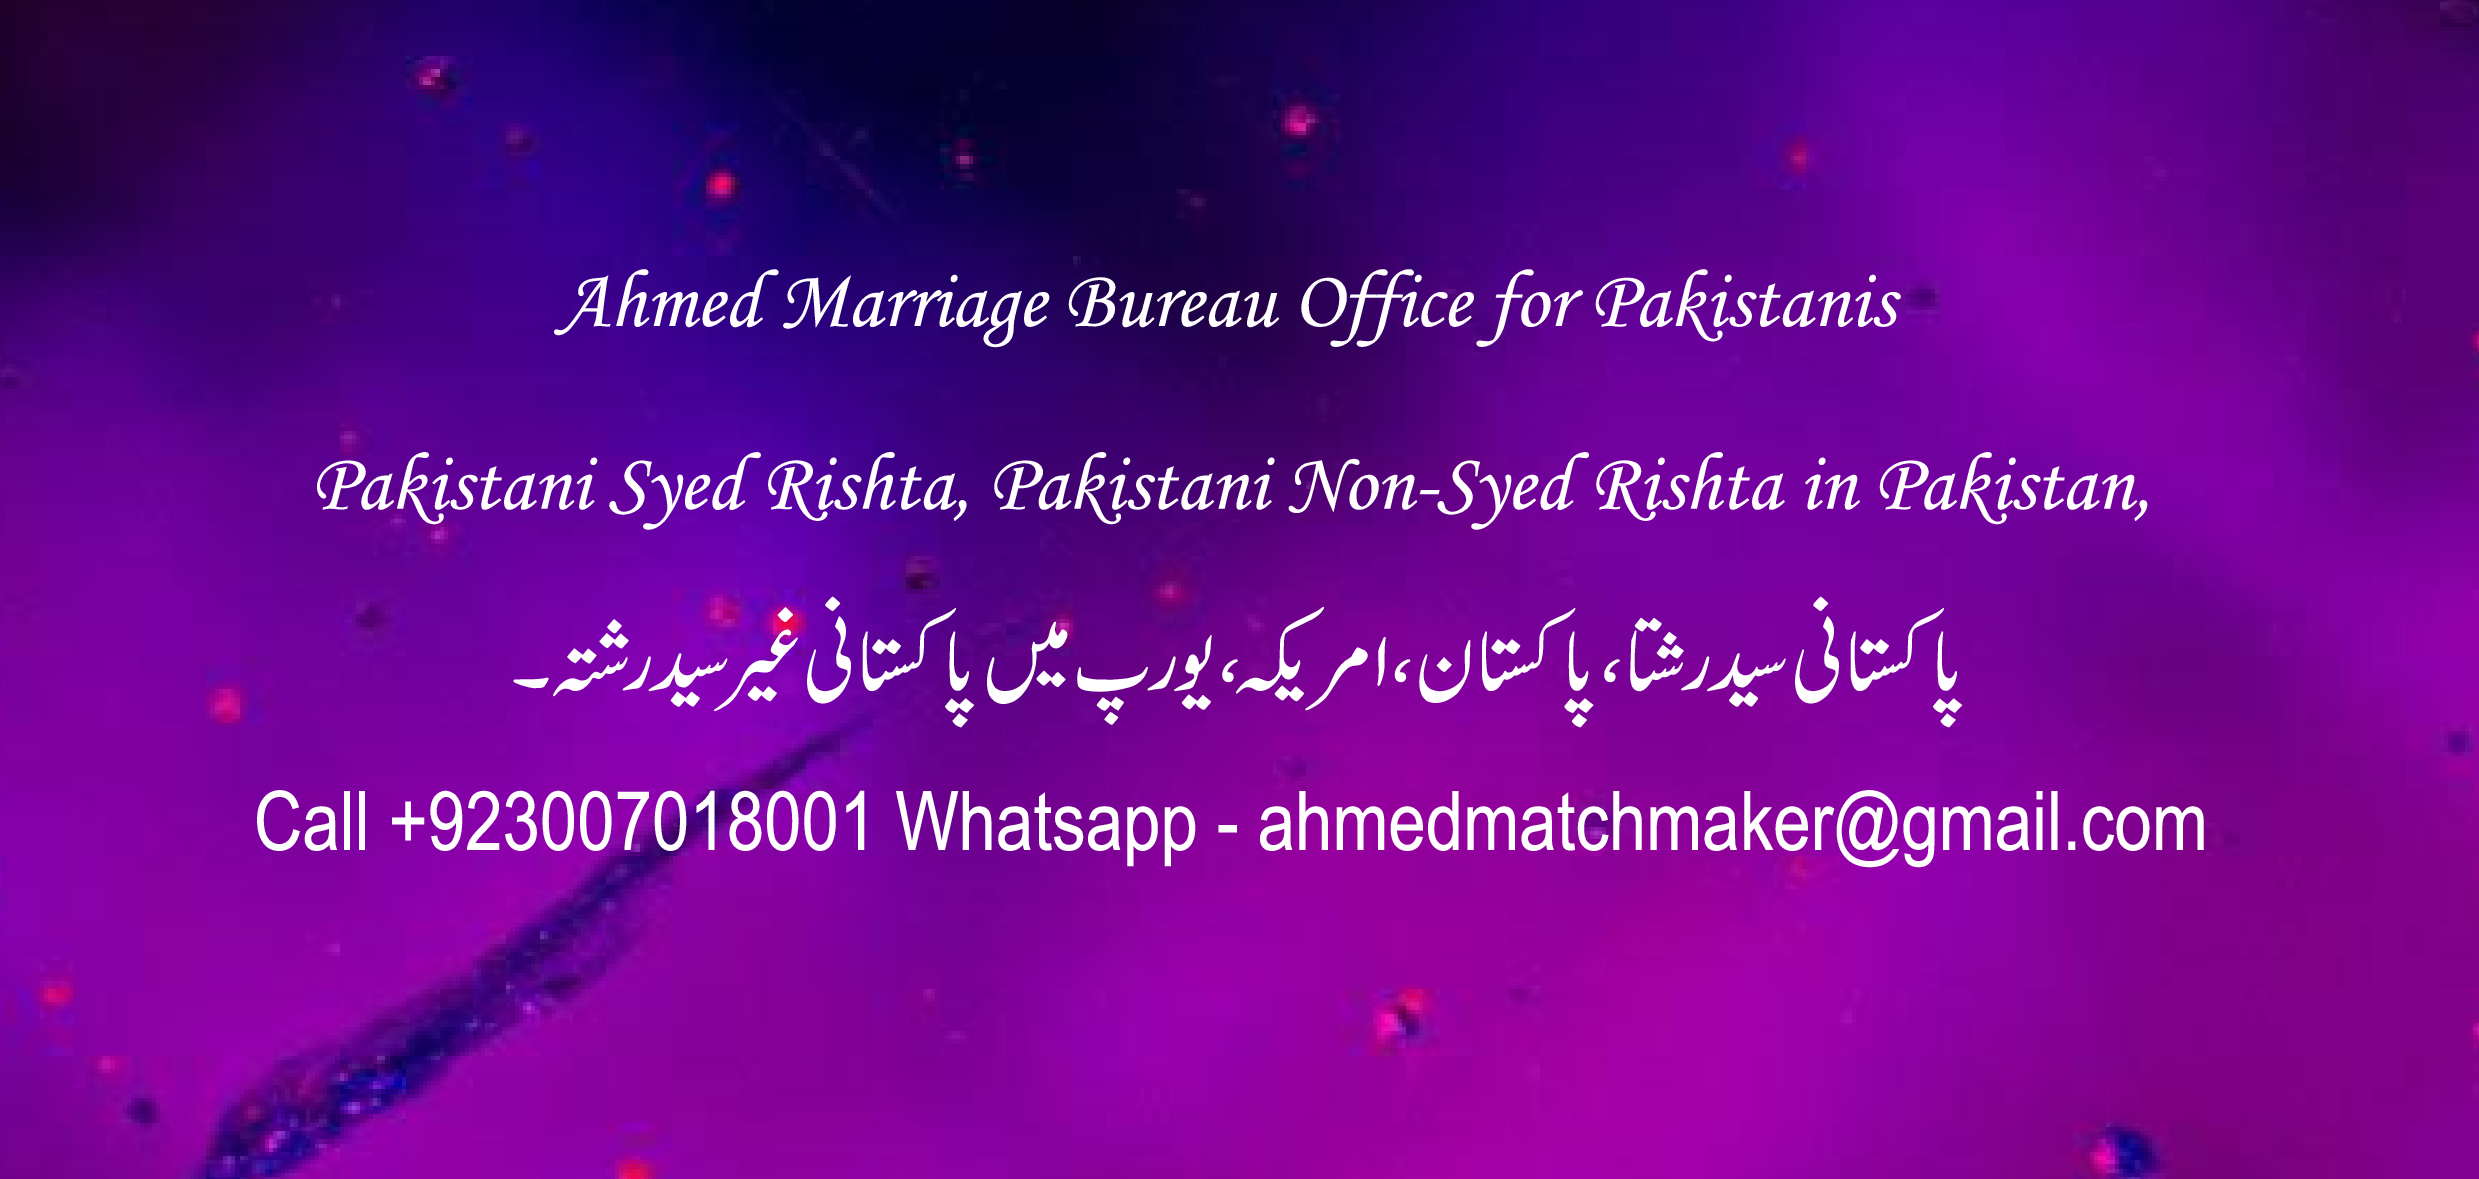 Pakistan-marriage-bureau-shaadi-matrimonial-America-Canada-Australia-Dubai-Europe-6.png